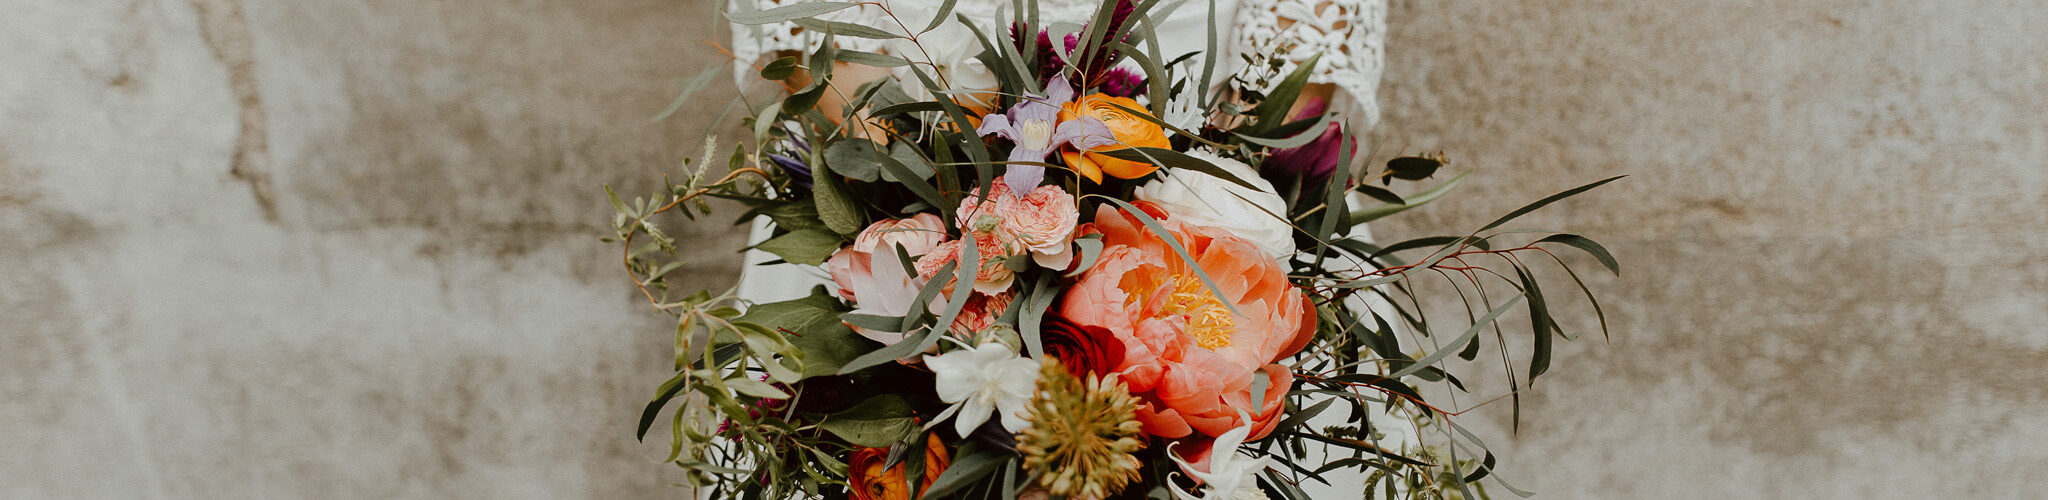 petite fleur wedding florist france 17